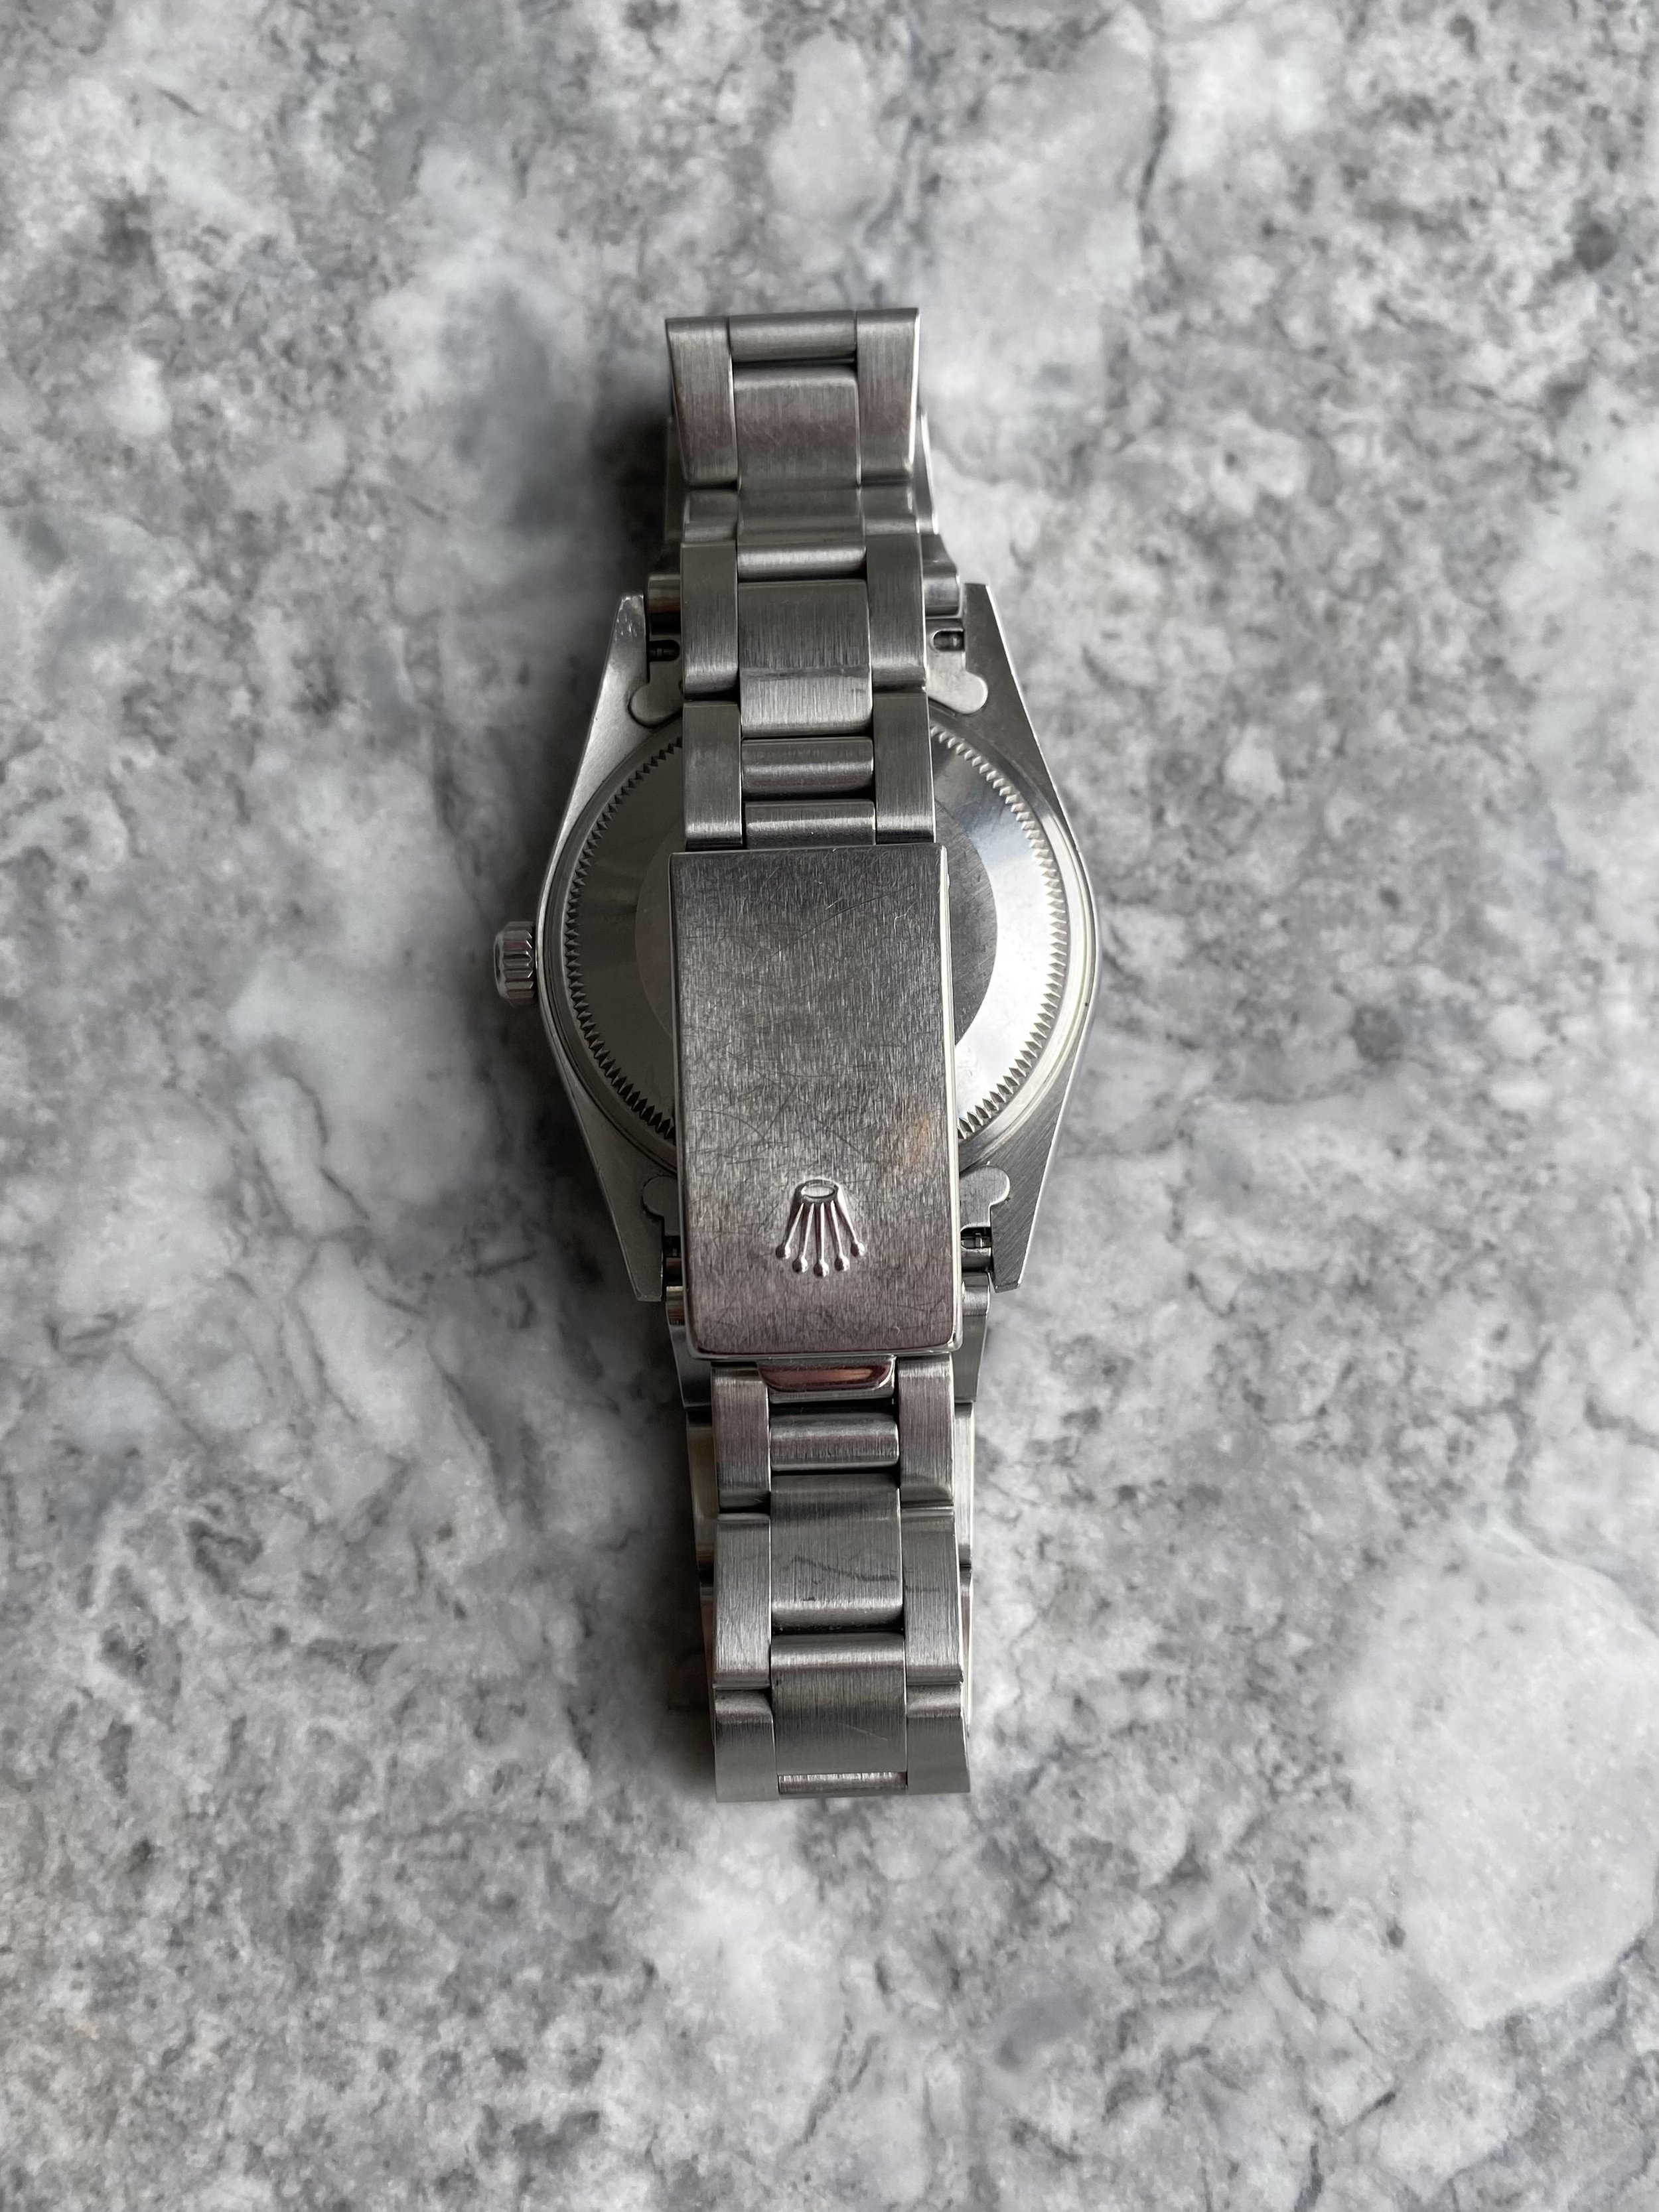 Rolex Air King 14000 - Black. — Danny's Vintage Watches